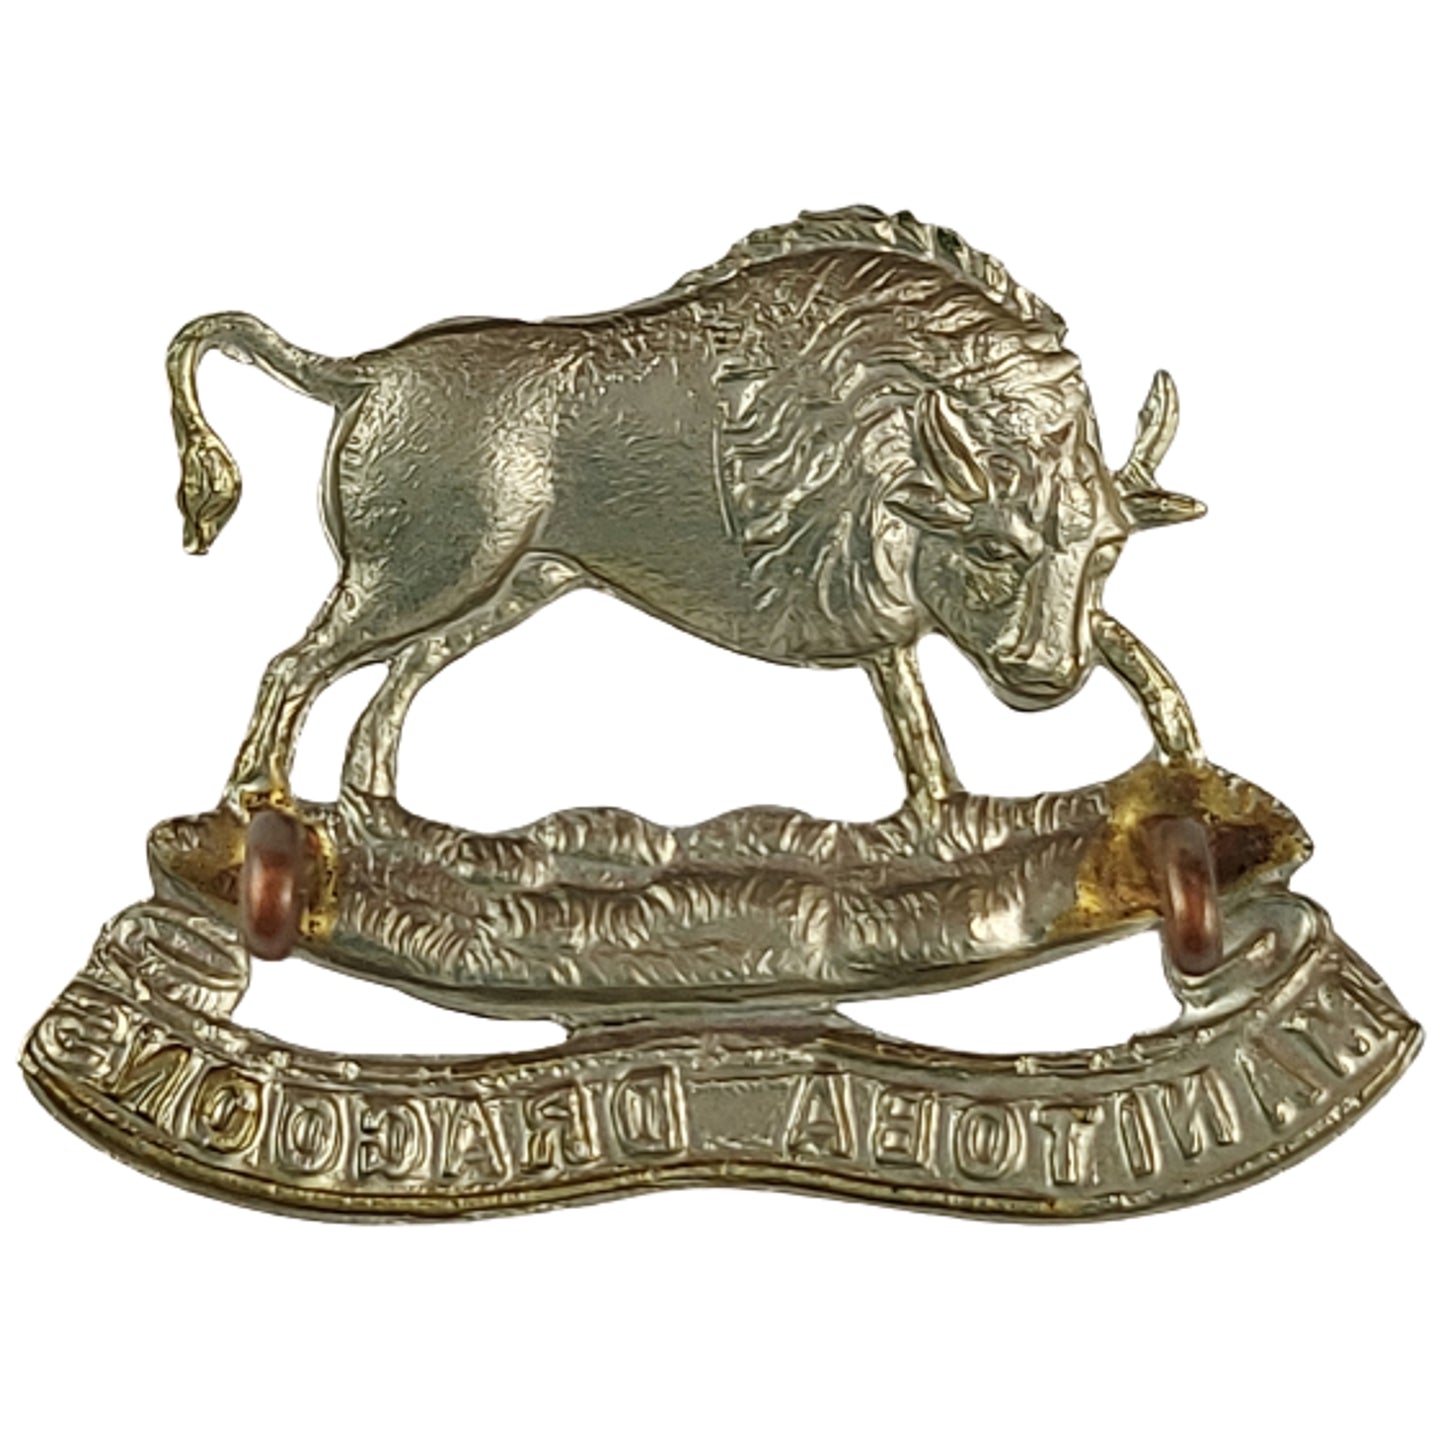 Pre-WW1 Canadian 12th Manitoba Dragoons Cap Badge